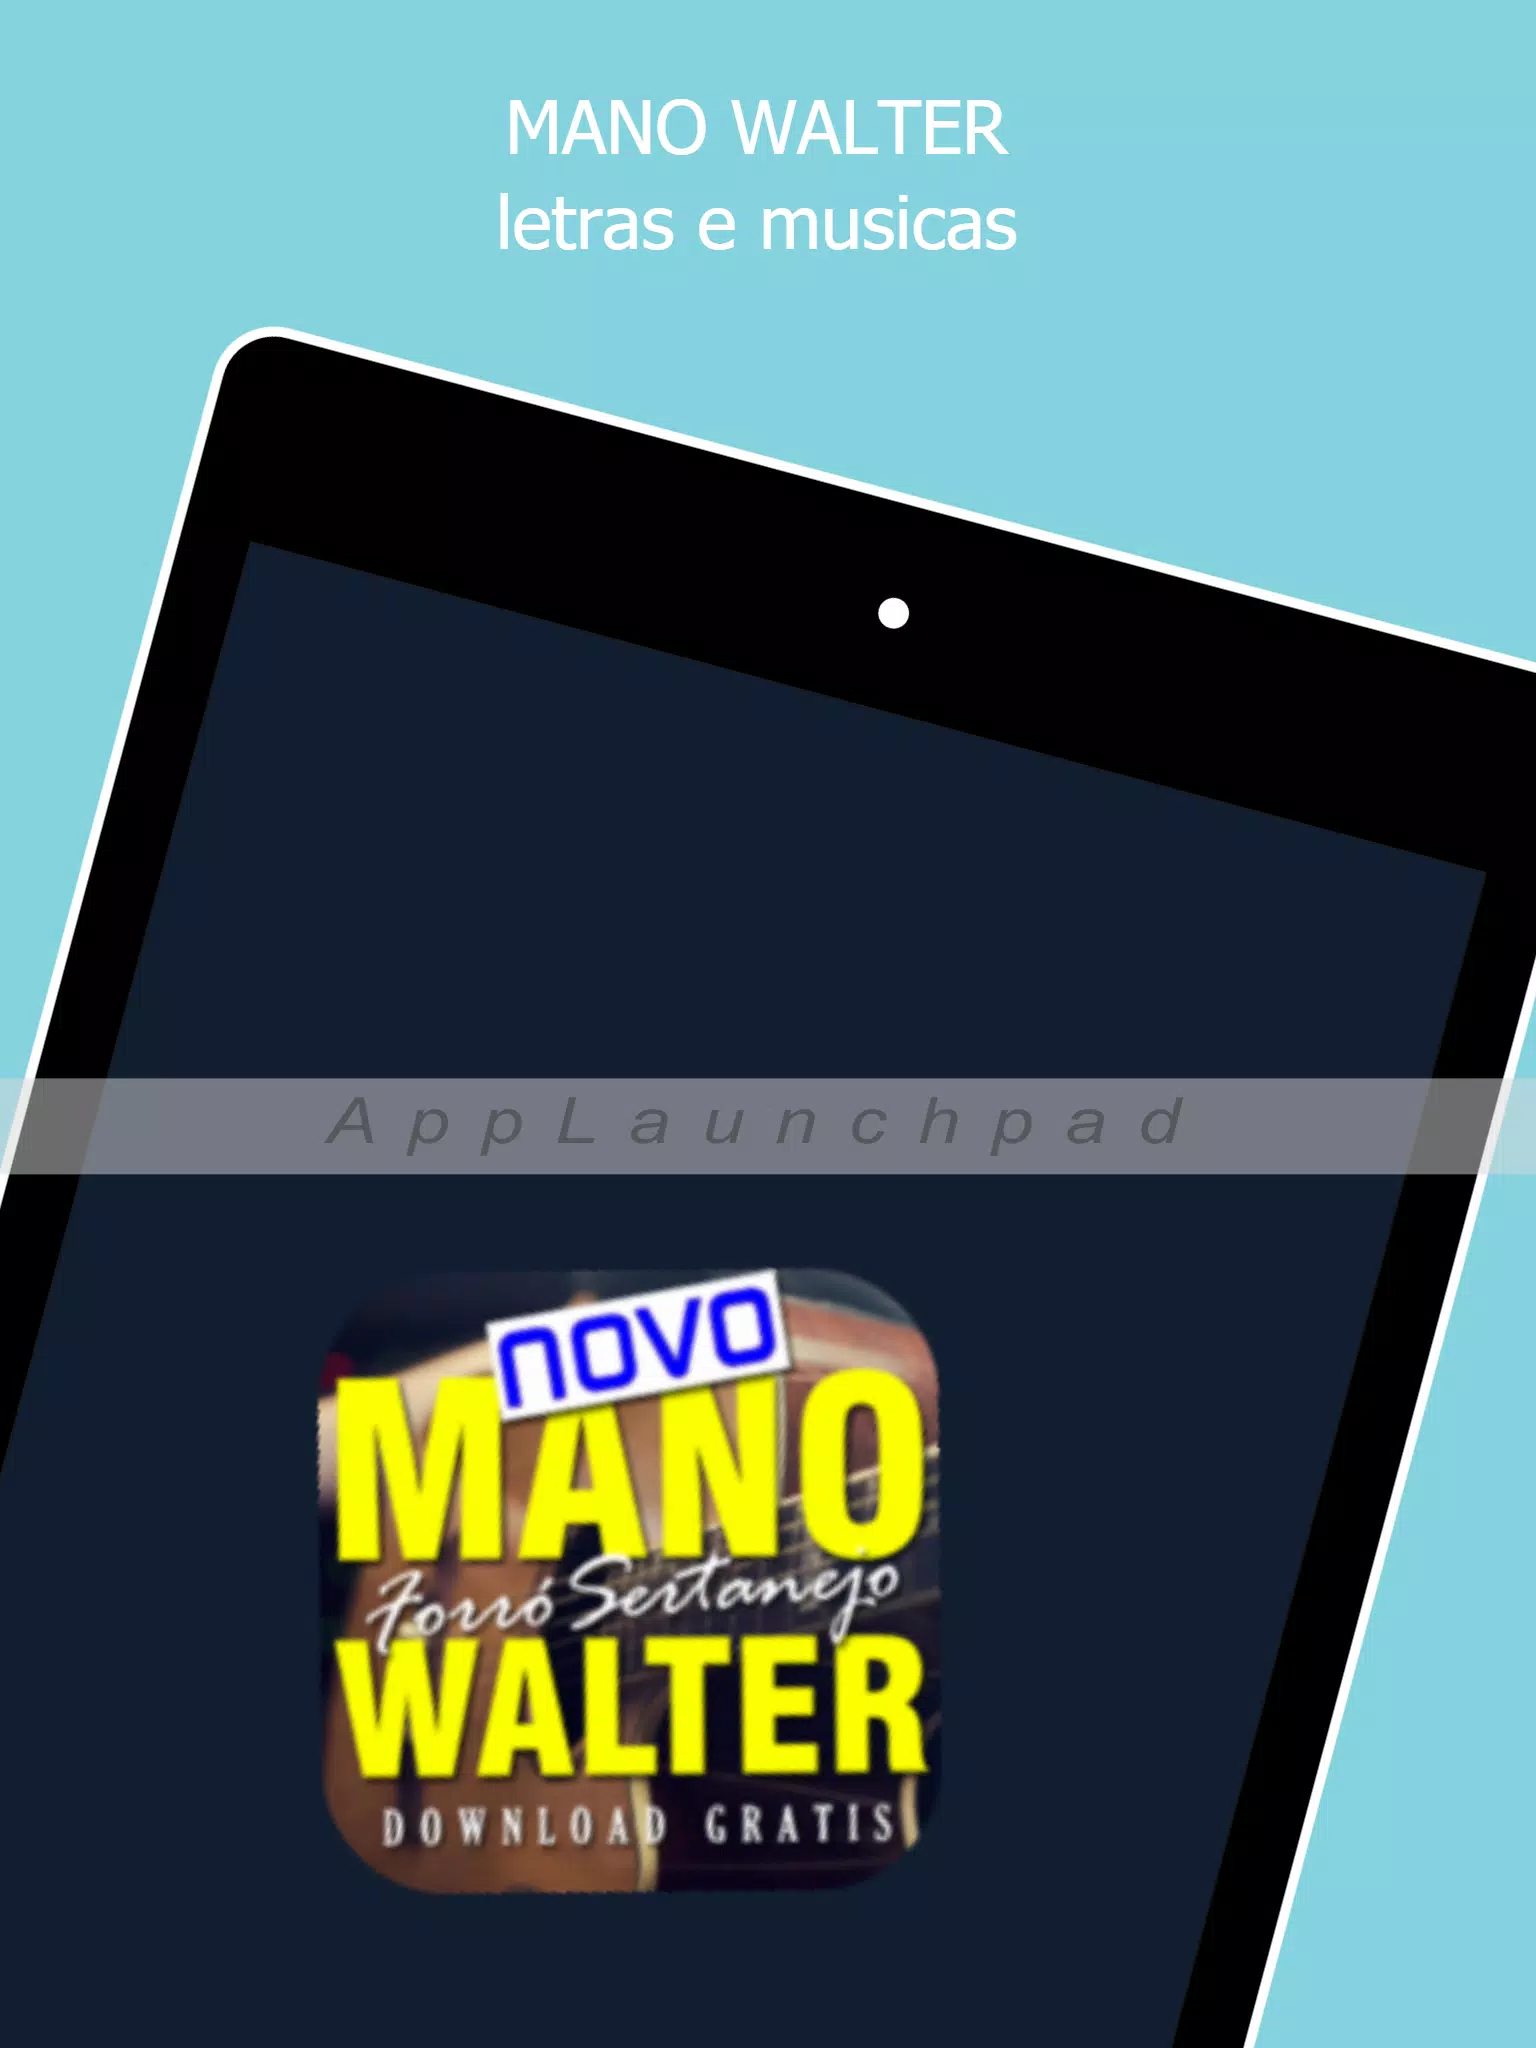 Mano Walter 2018 sua musica palco mp3 vaquejada APK for Android Download